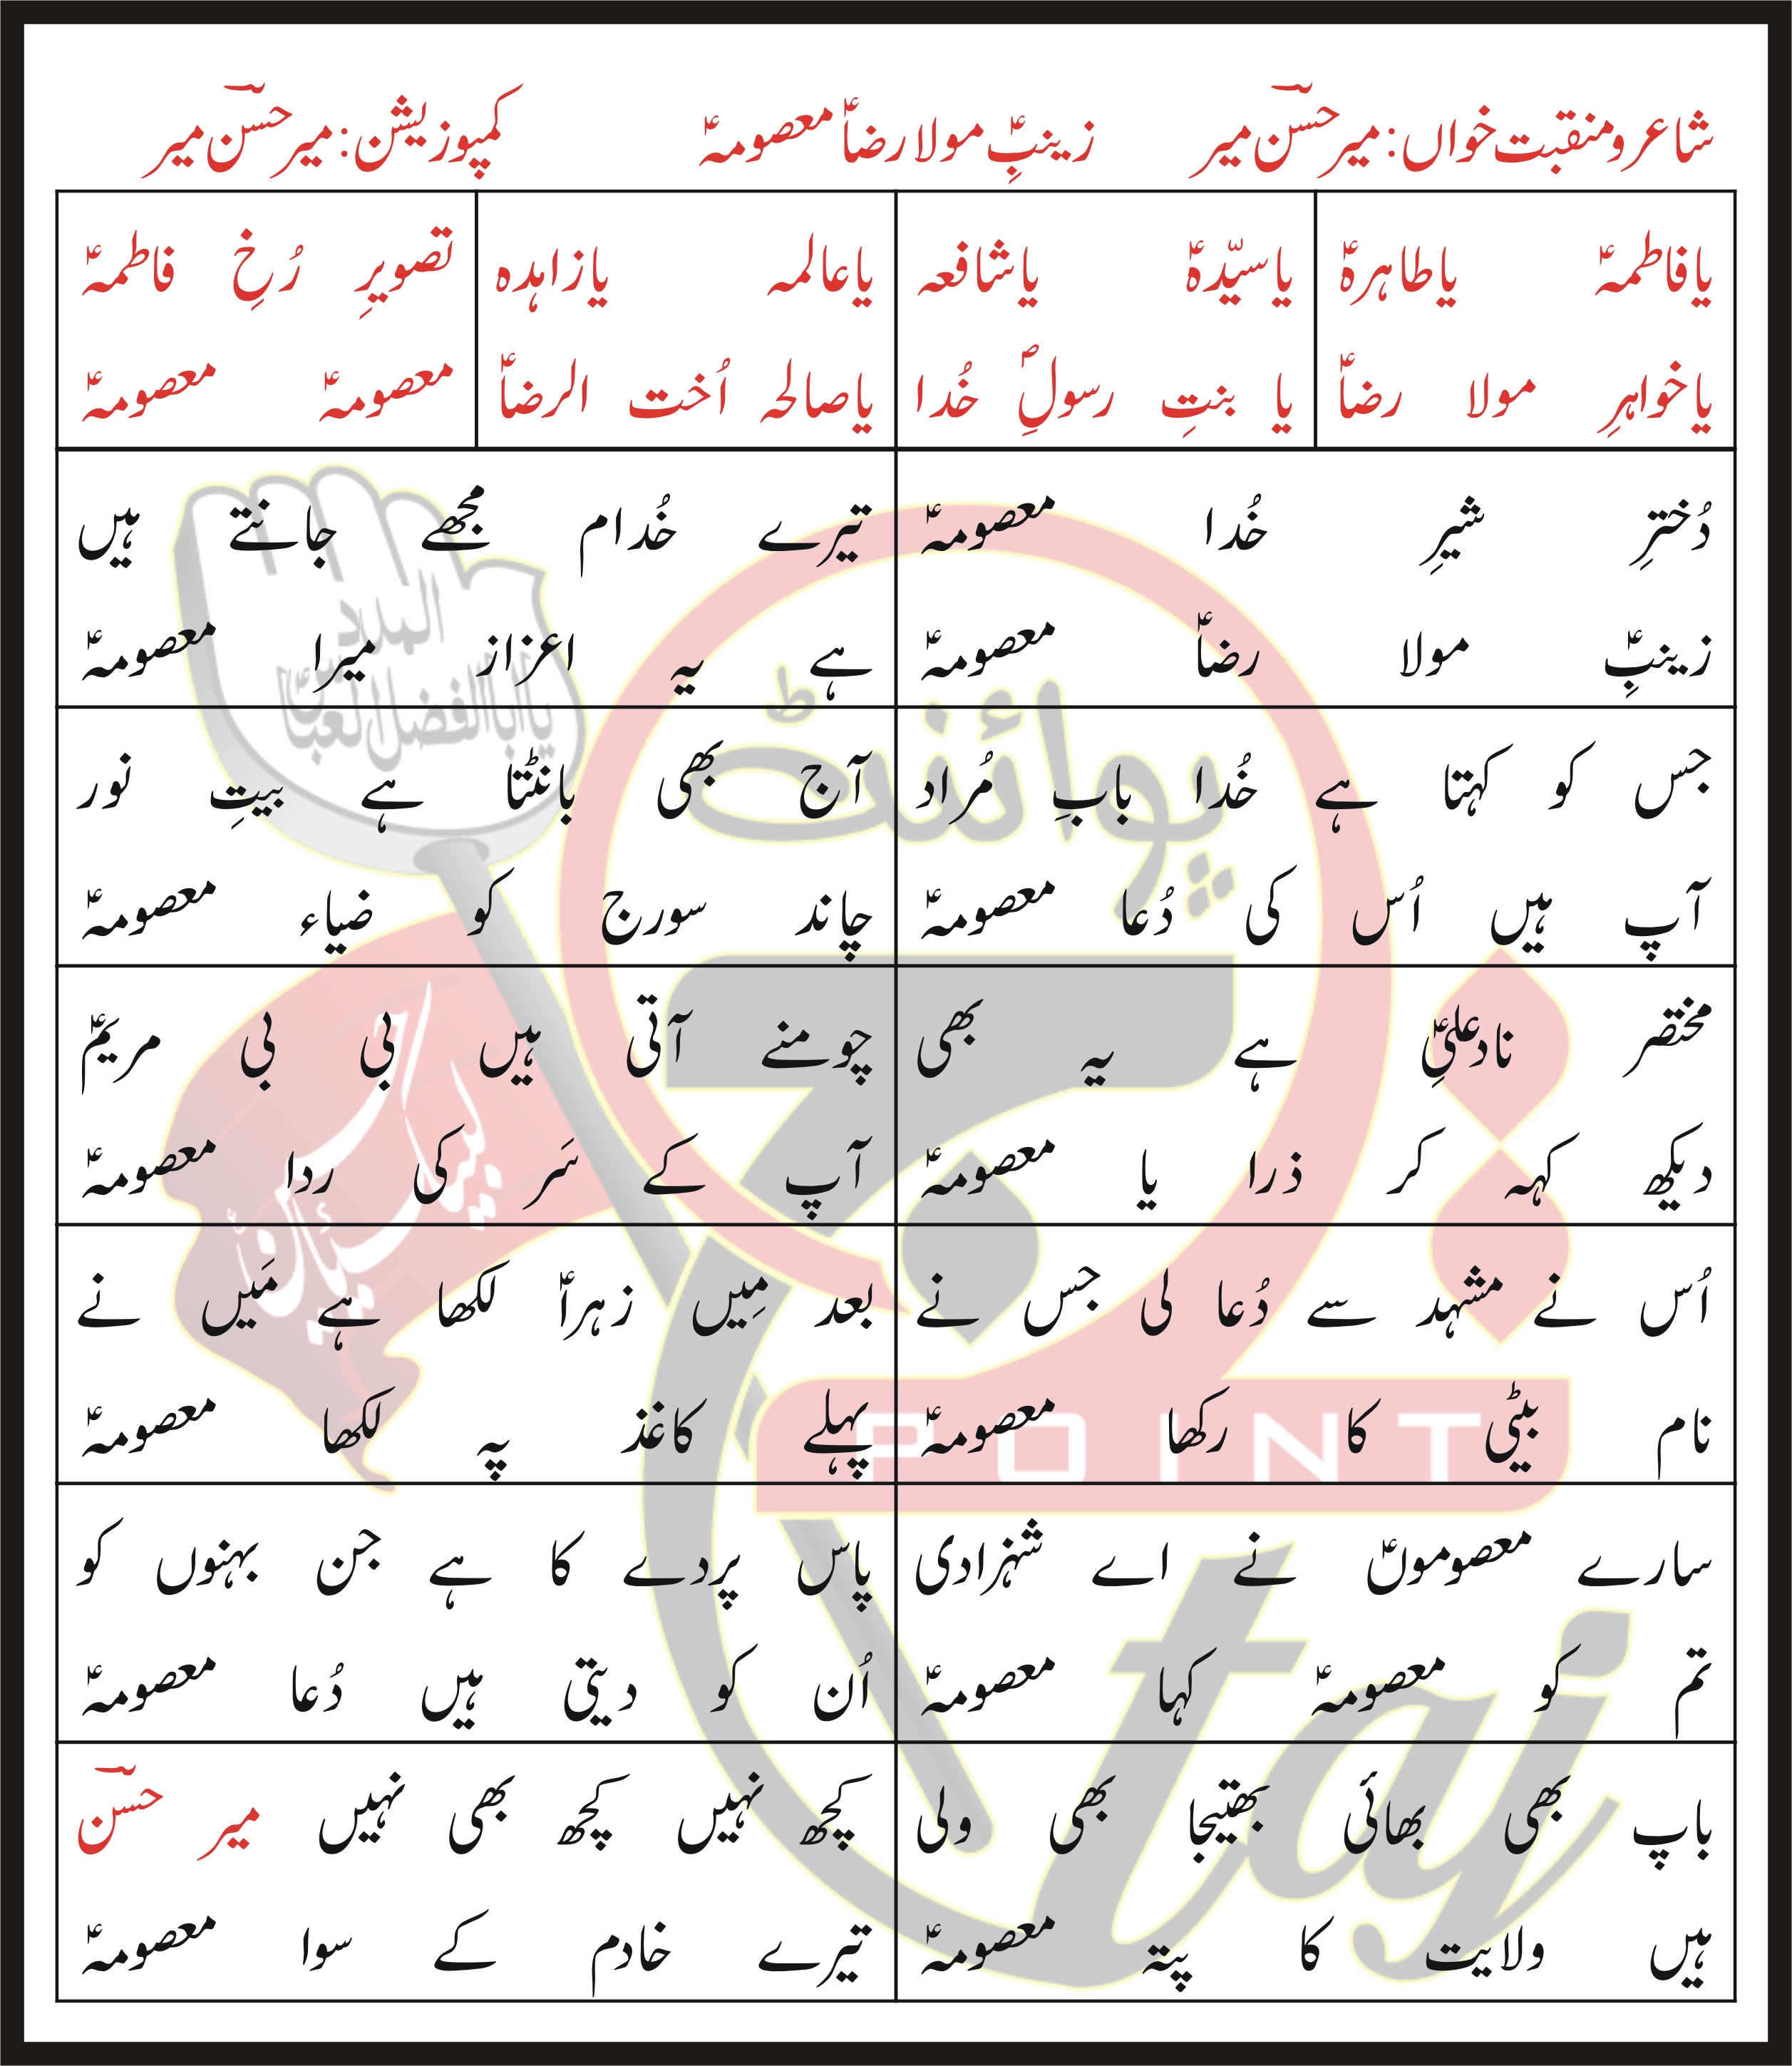 Zainab-e-Moula Raza Masooma Lyrics In Urdu and Roman Urdu